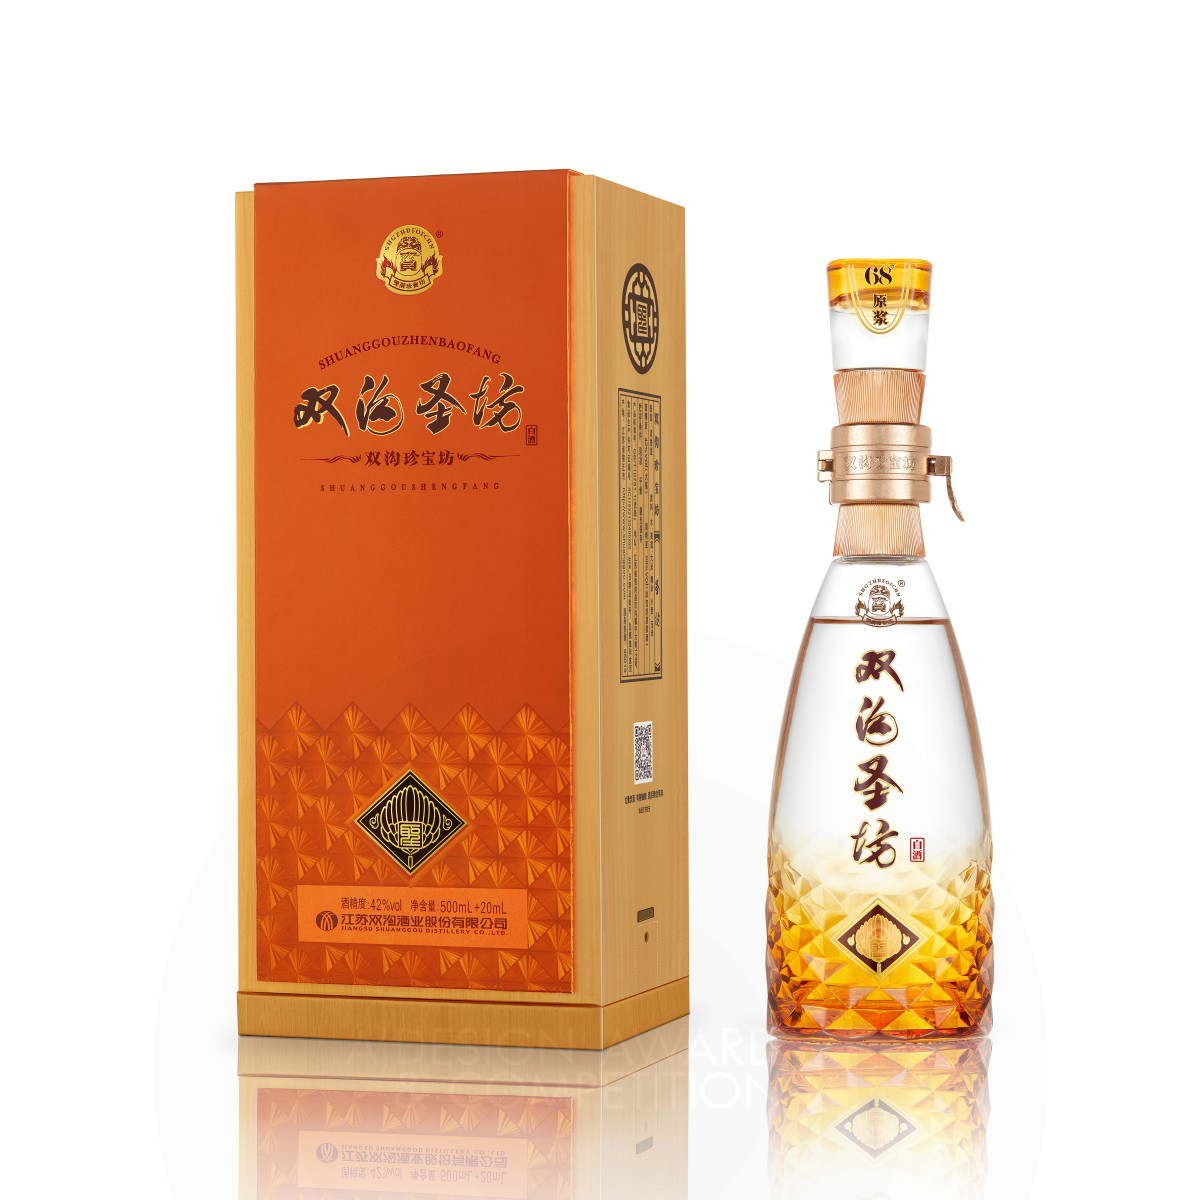 Shuanggou Shengfang <b>Alcoholic Beverage Packaging